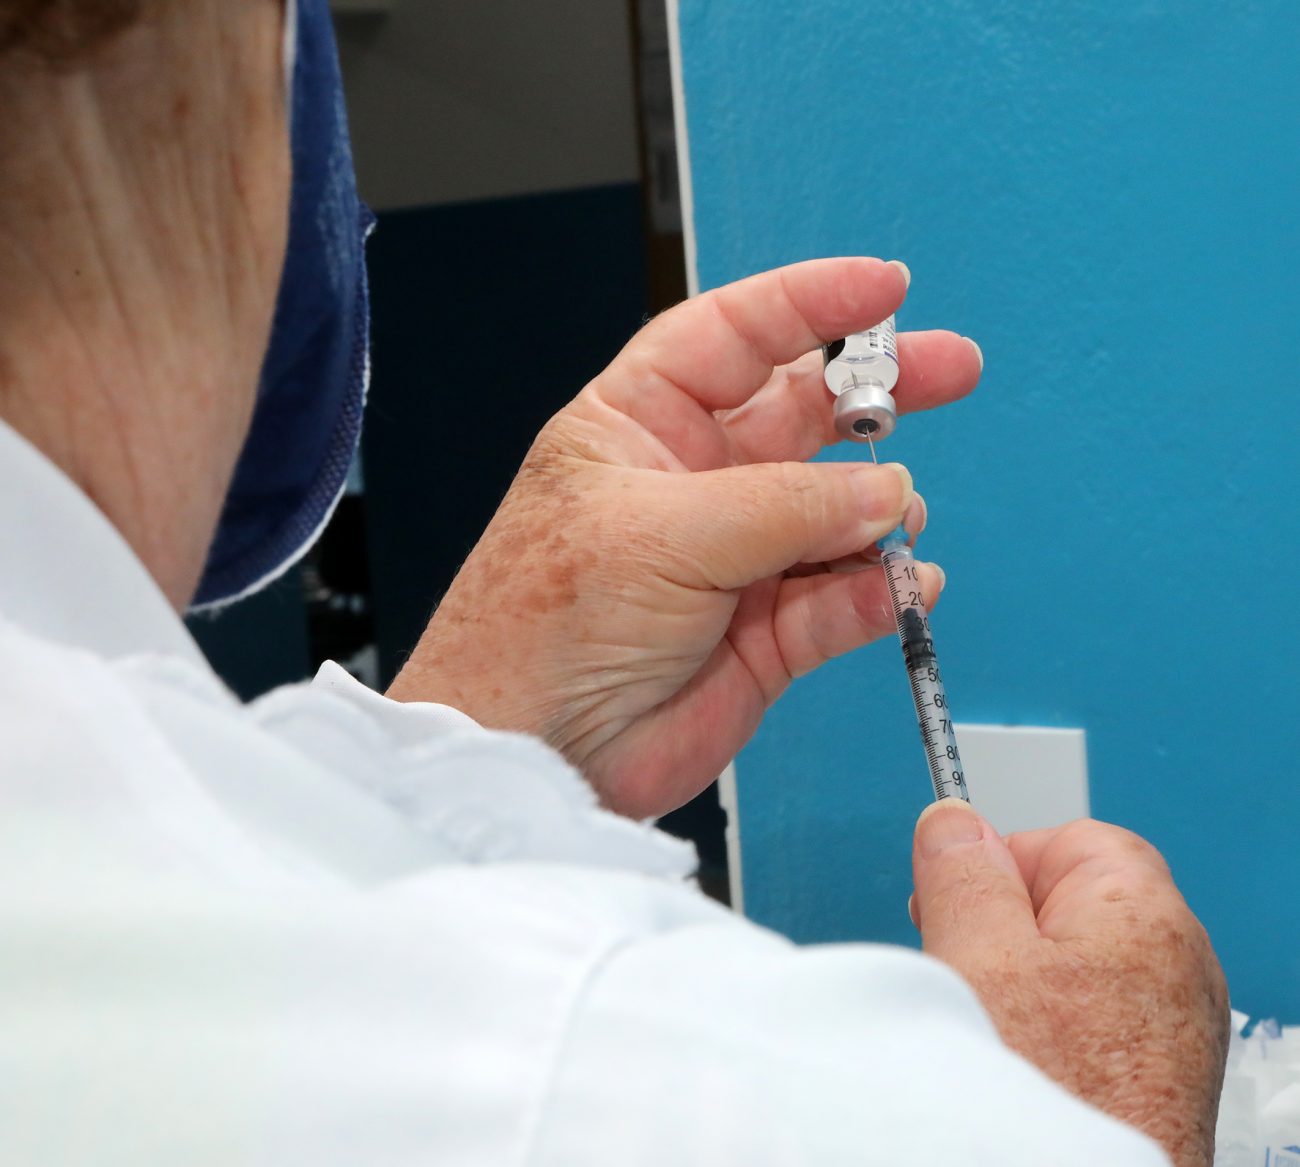 Foto de profissional de enfermagem preparando dose da vacina